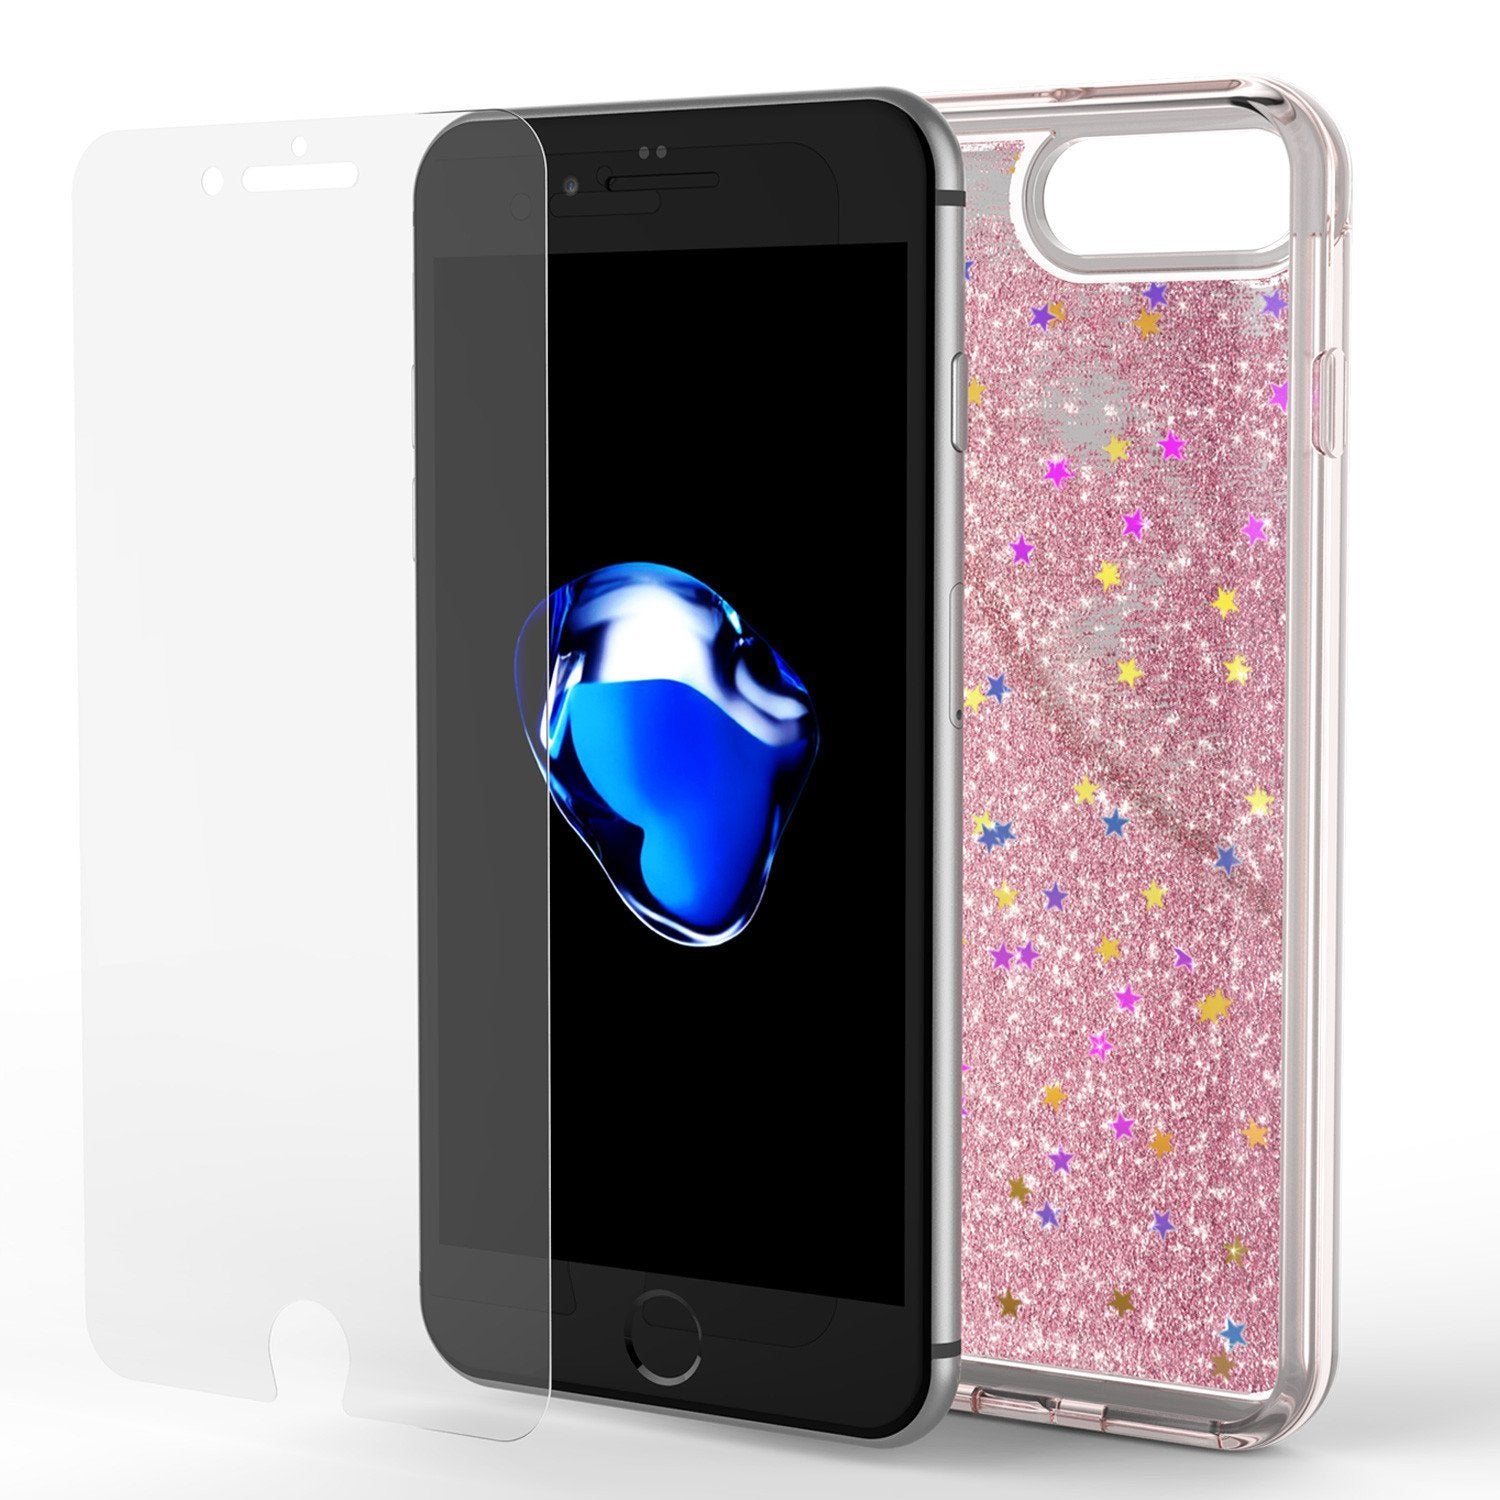 iPhone 8+ Plus Case PunkCase Liquid Rose, Floating Glitter Cover Series